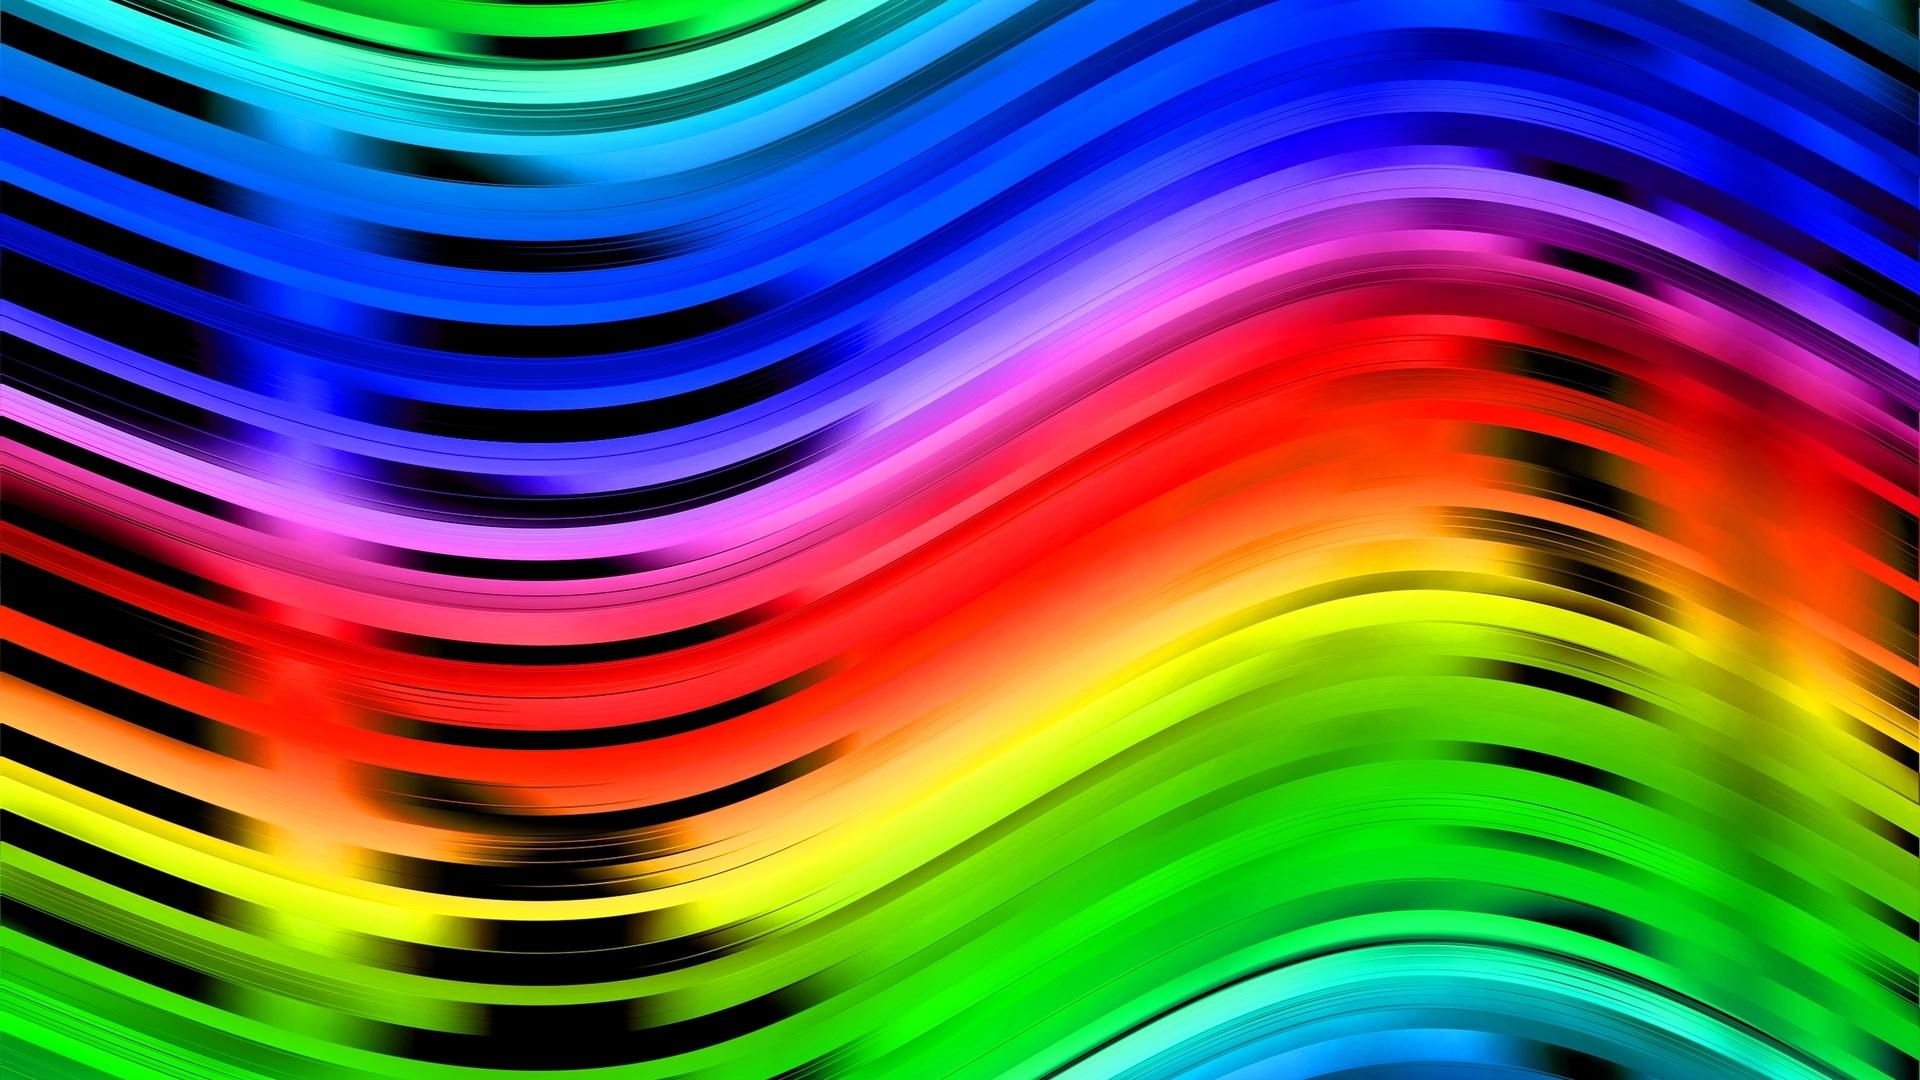 Regenbogen - Cool Rainbow Patterns Backgrounds , HD Wallpaper & Backgrounds